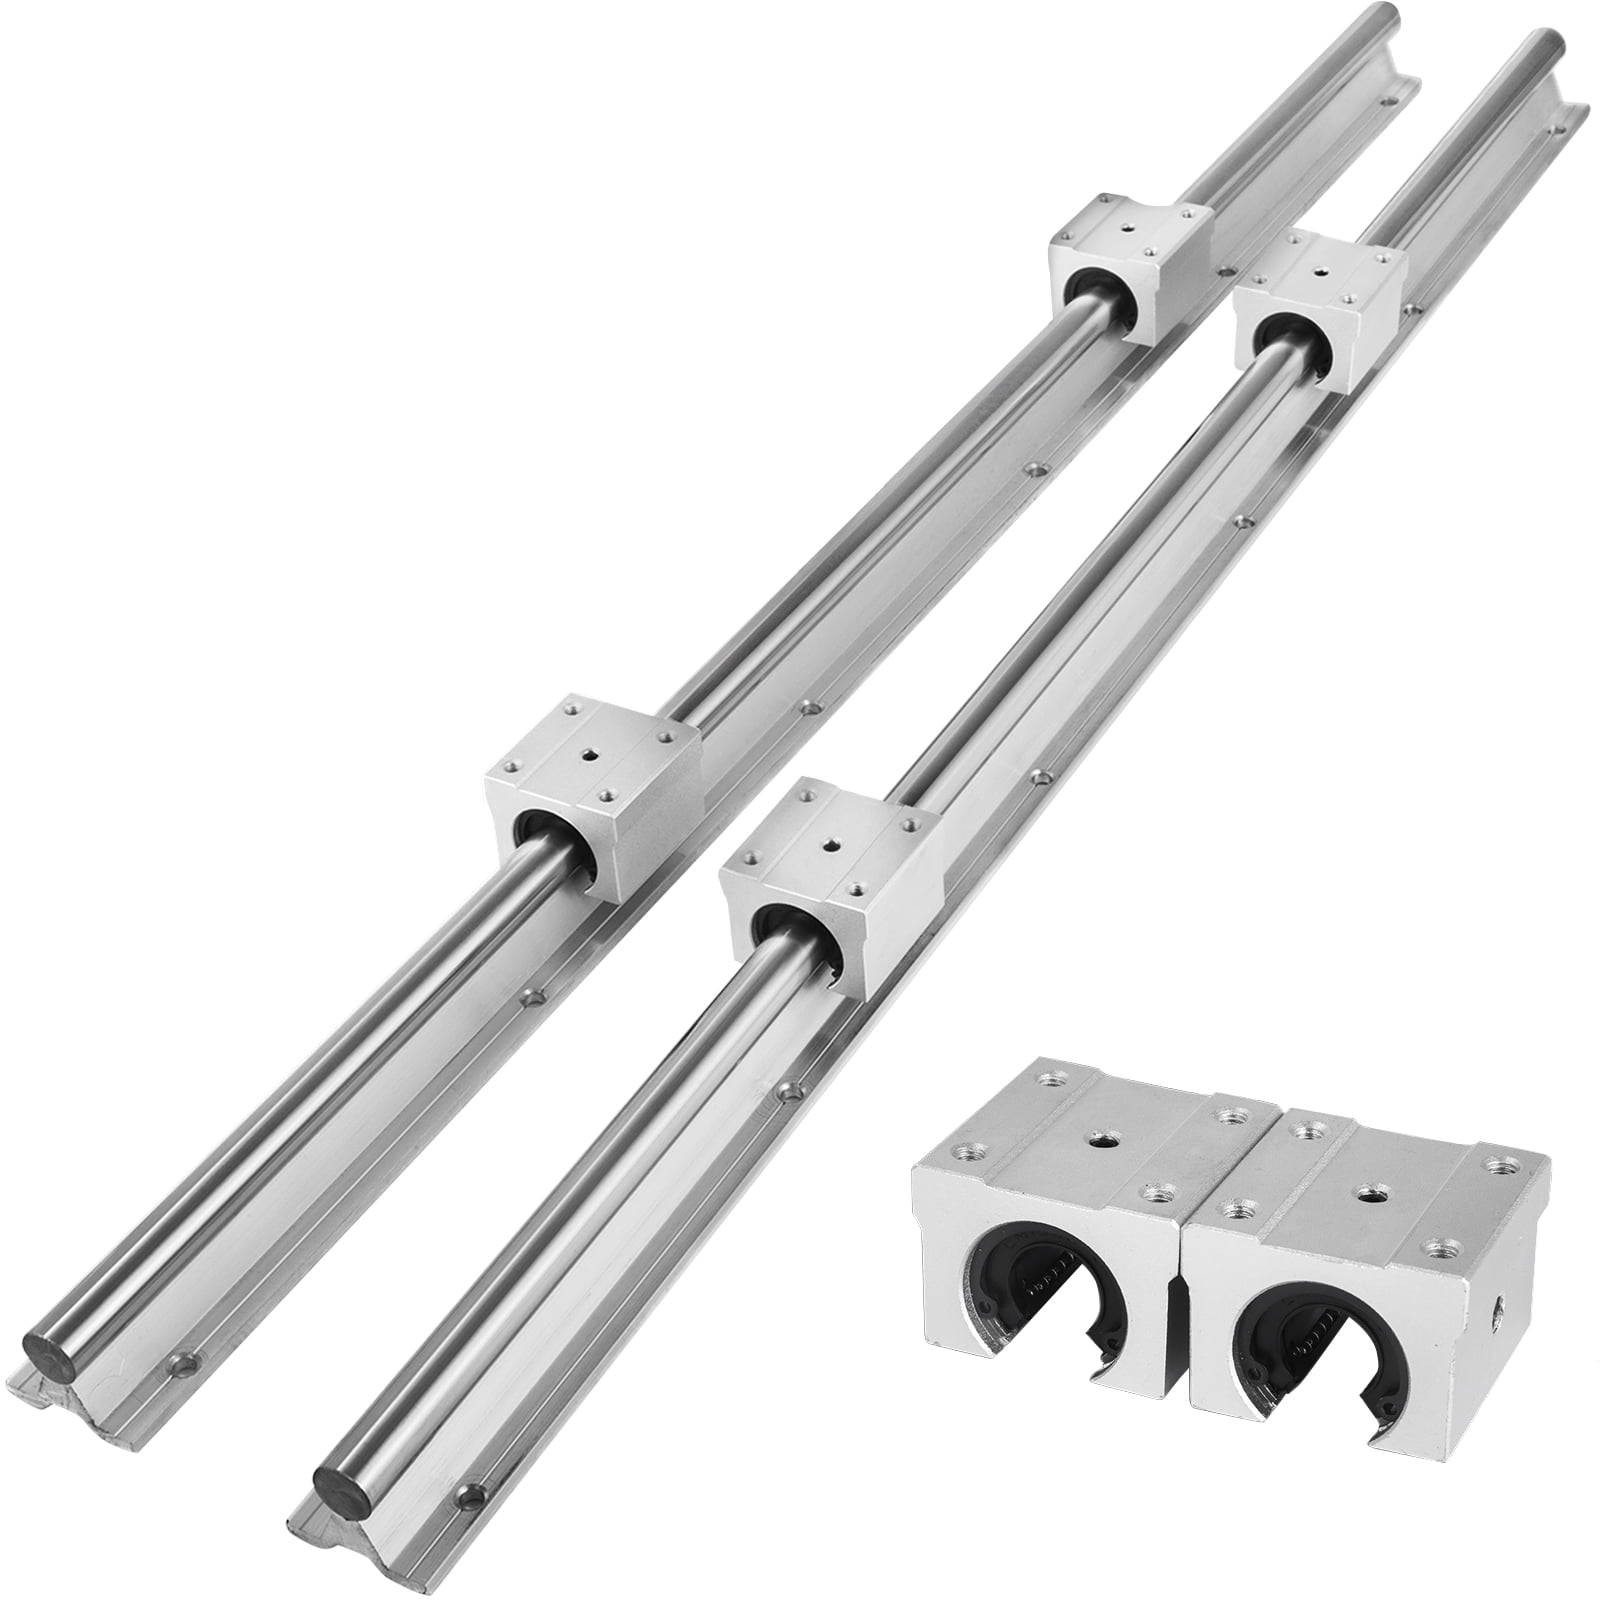 2 pcs SBR20 1500mm linear bearing supported rails+4 pcs SBR20UU bearing blocks 